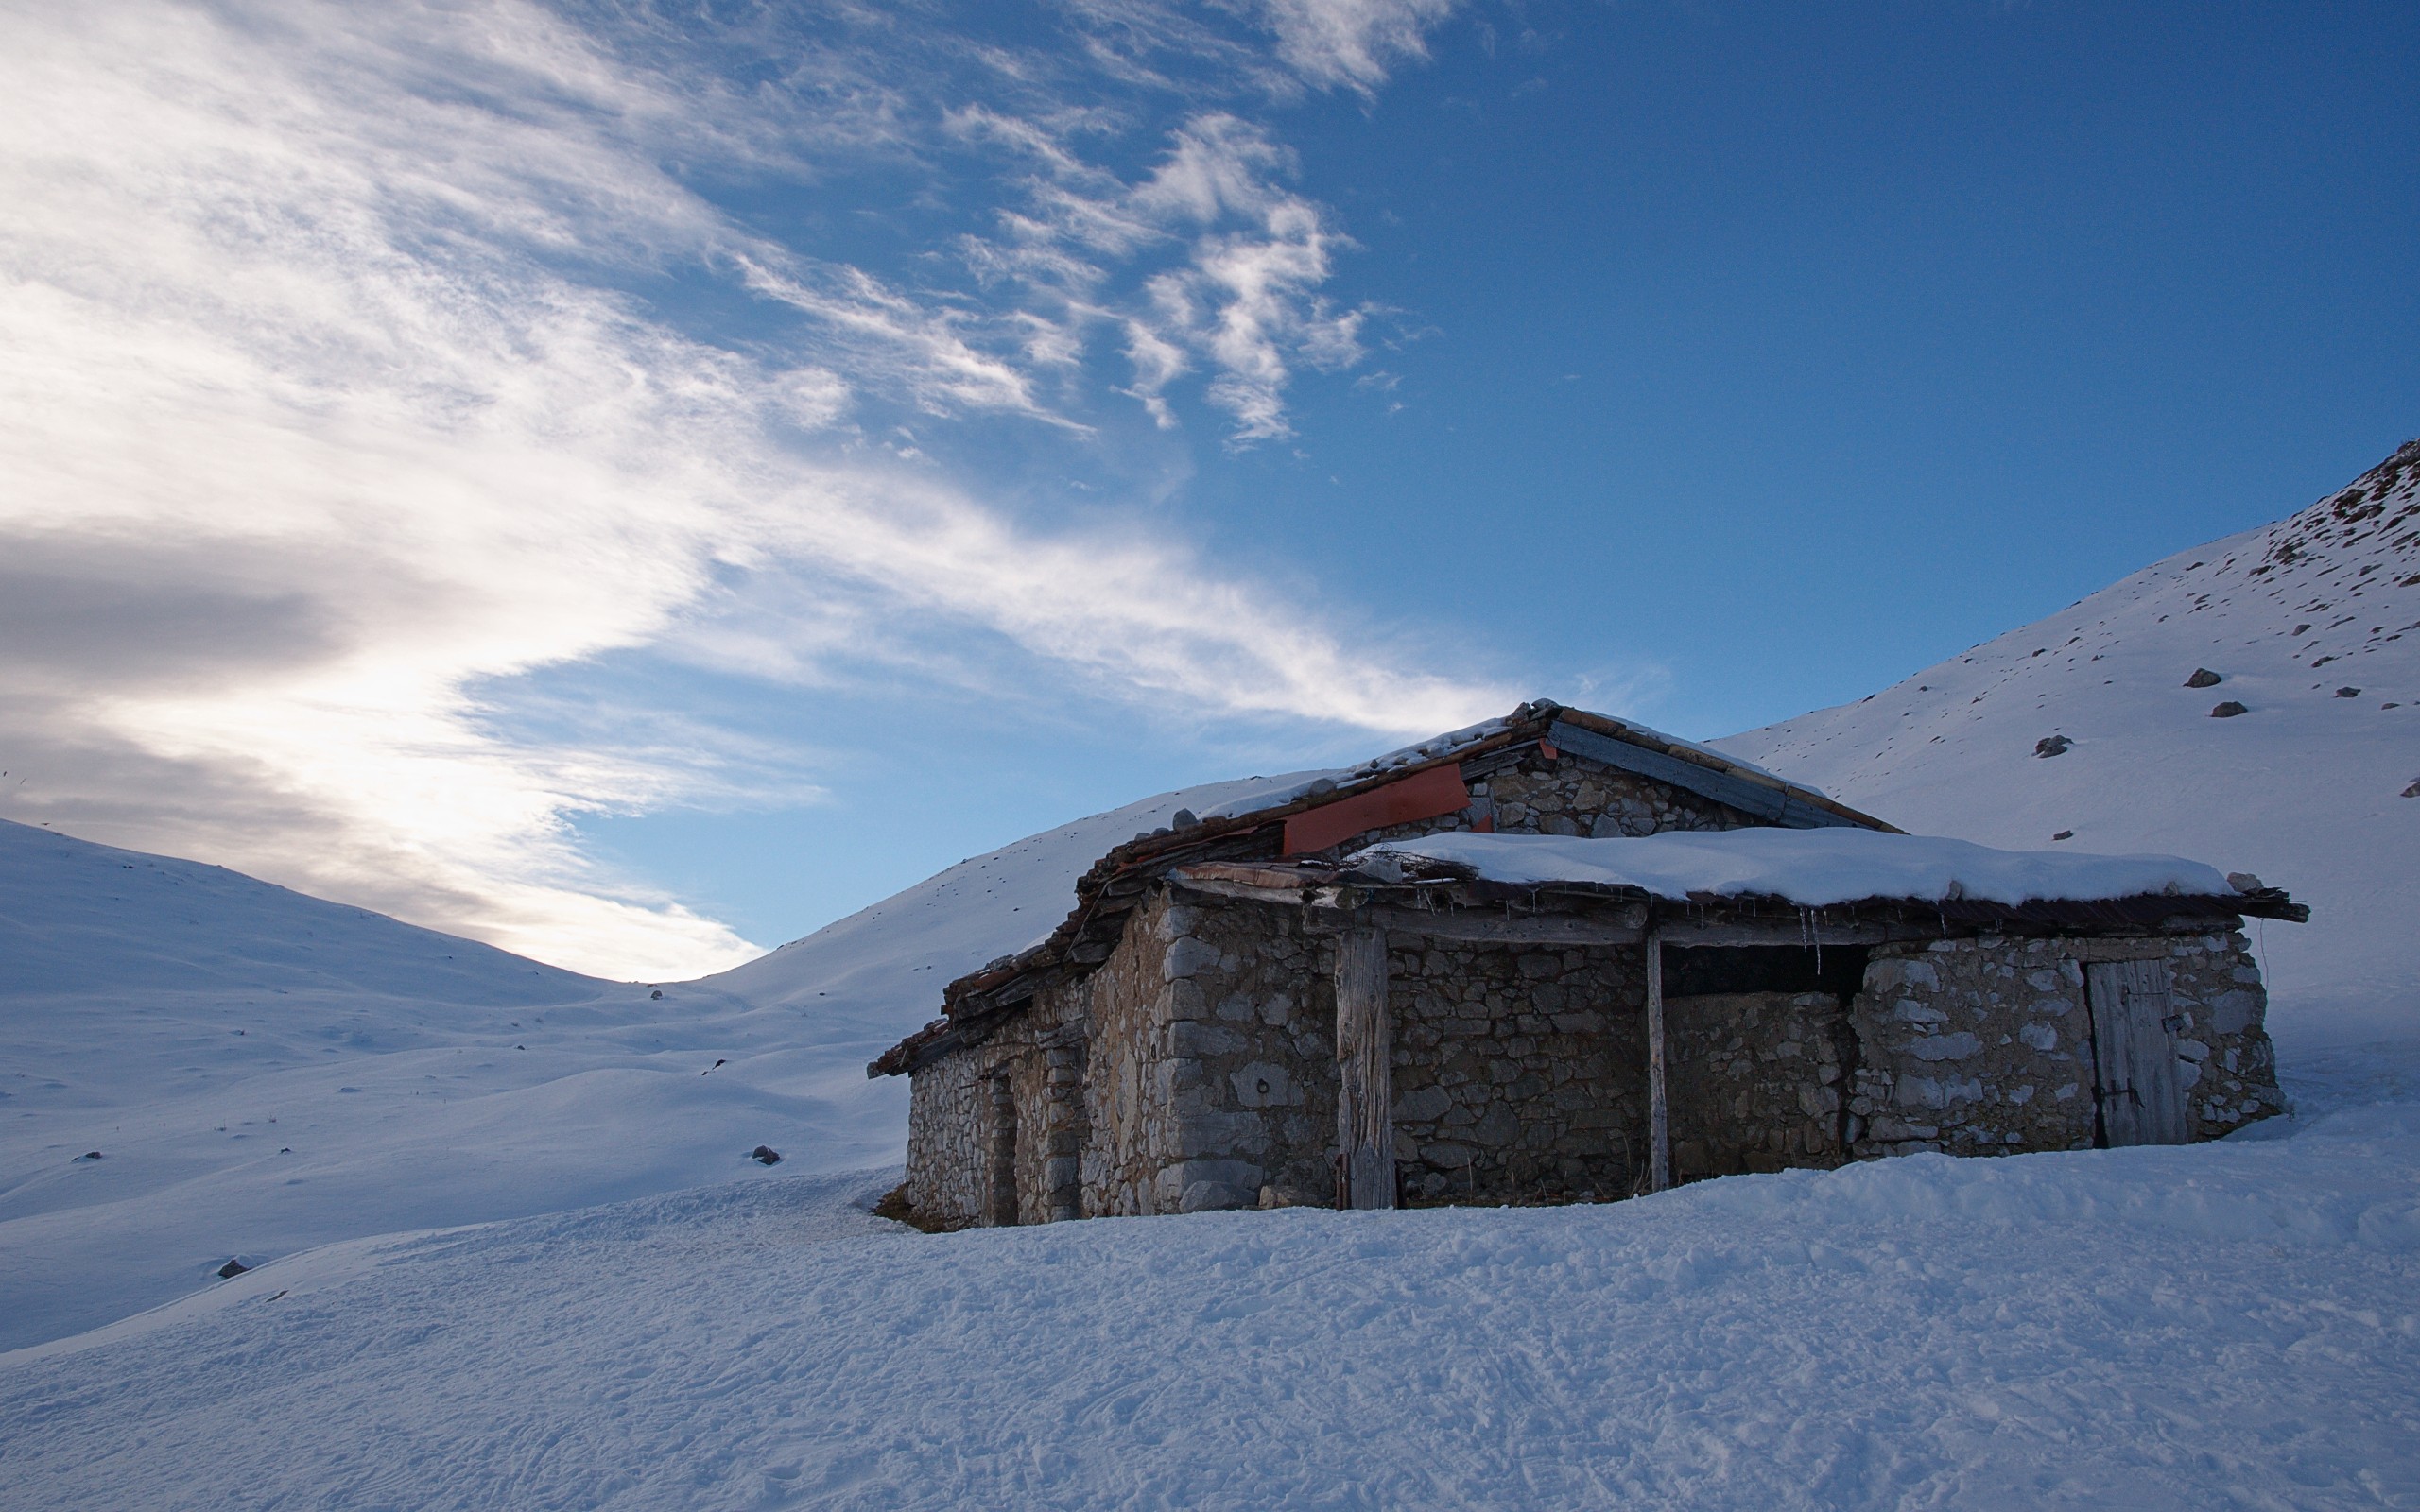 Hut in the snow...